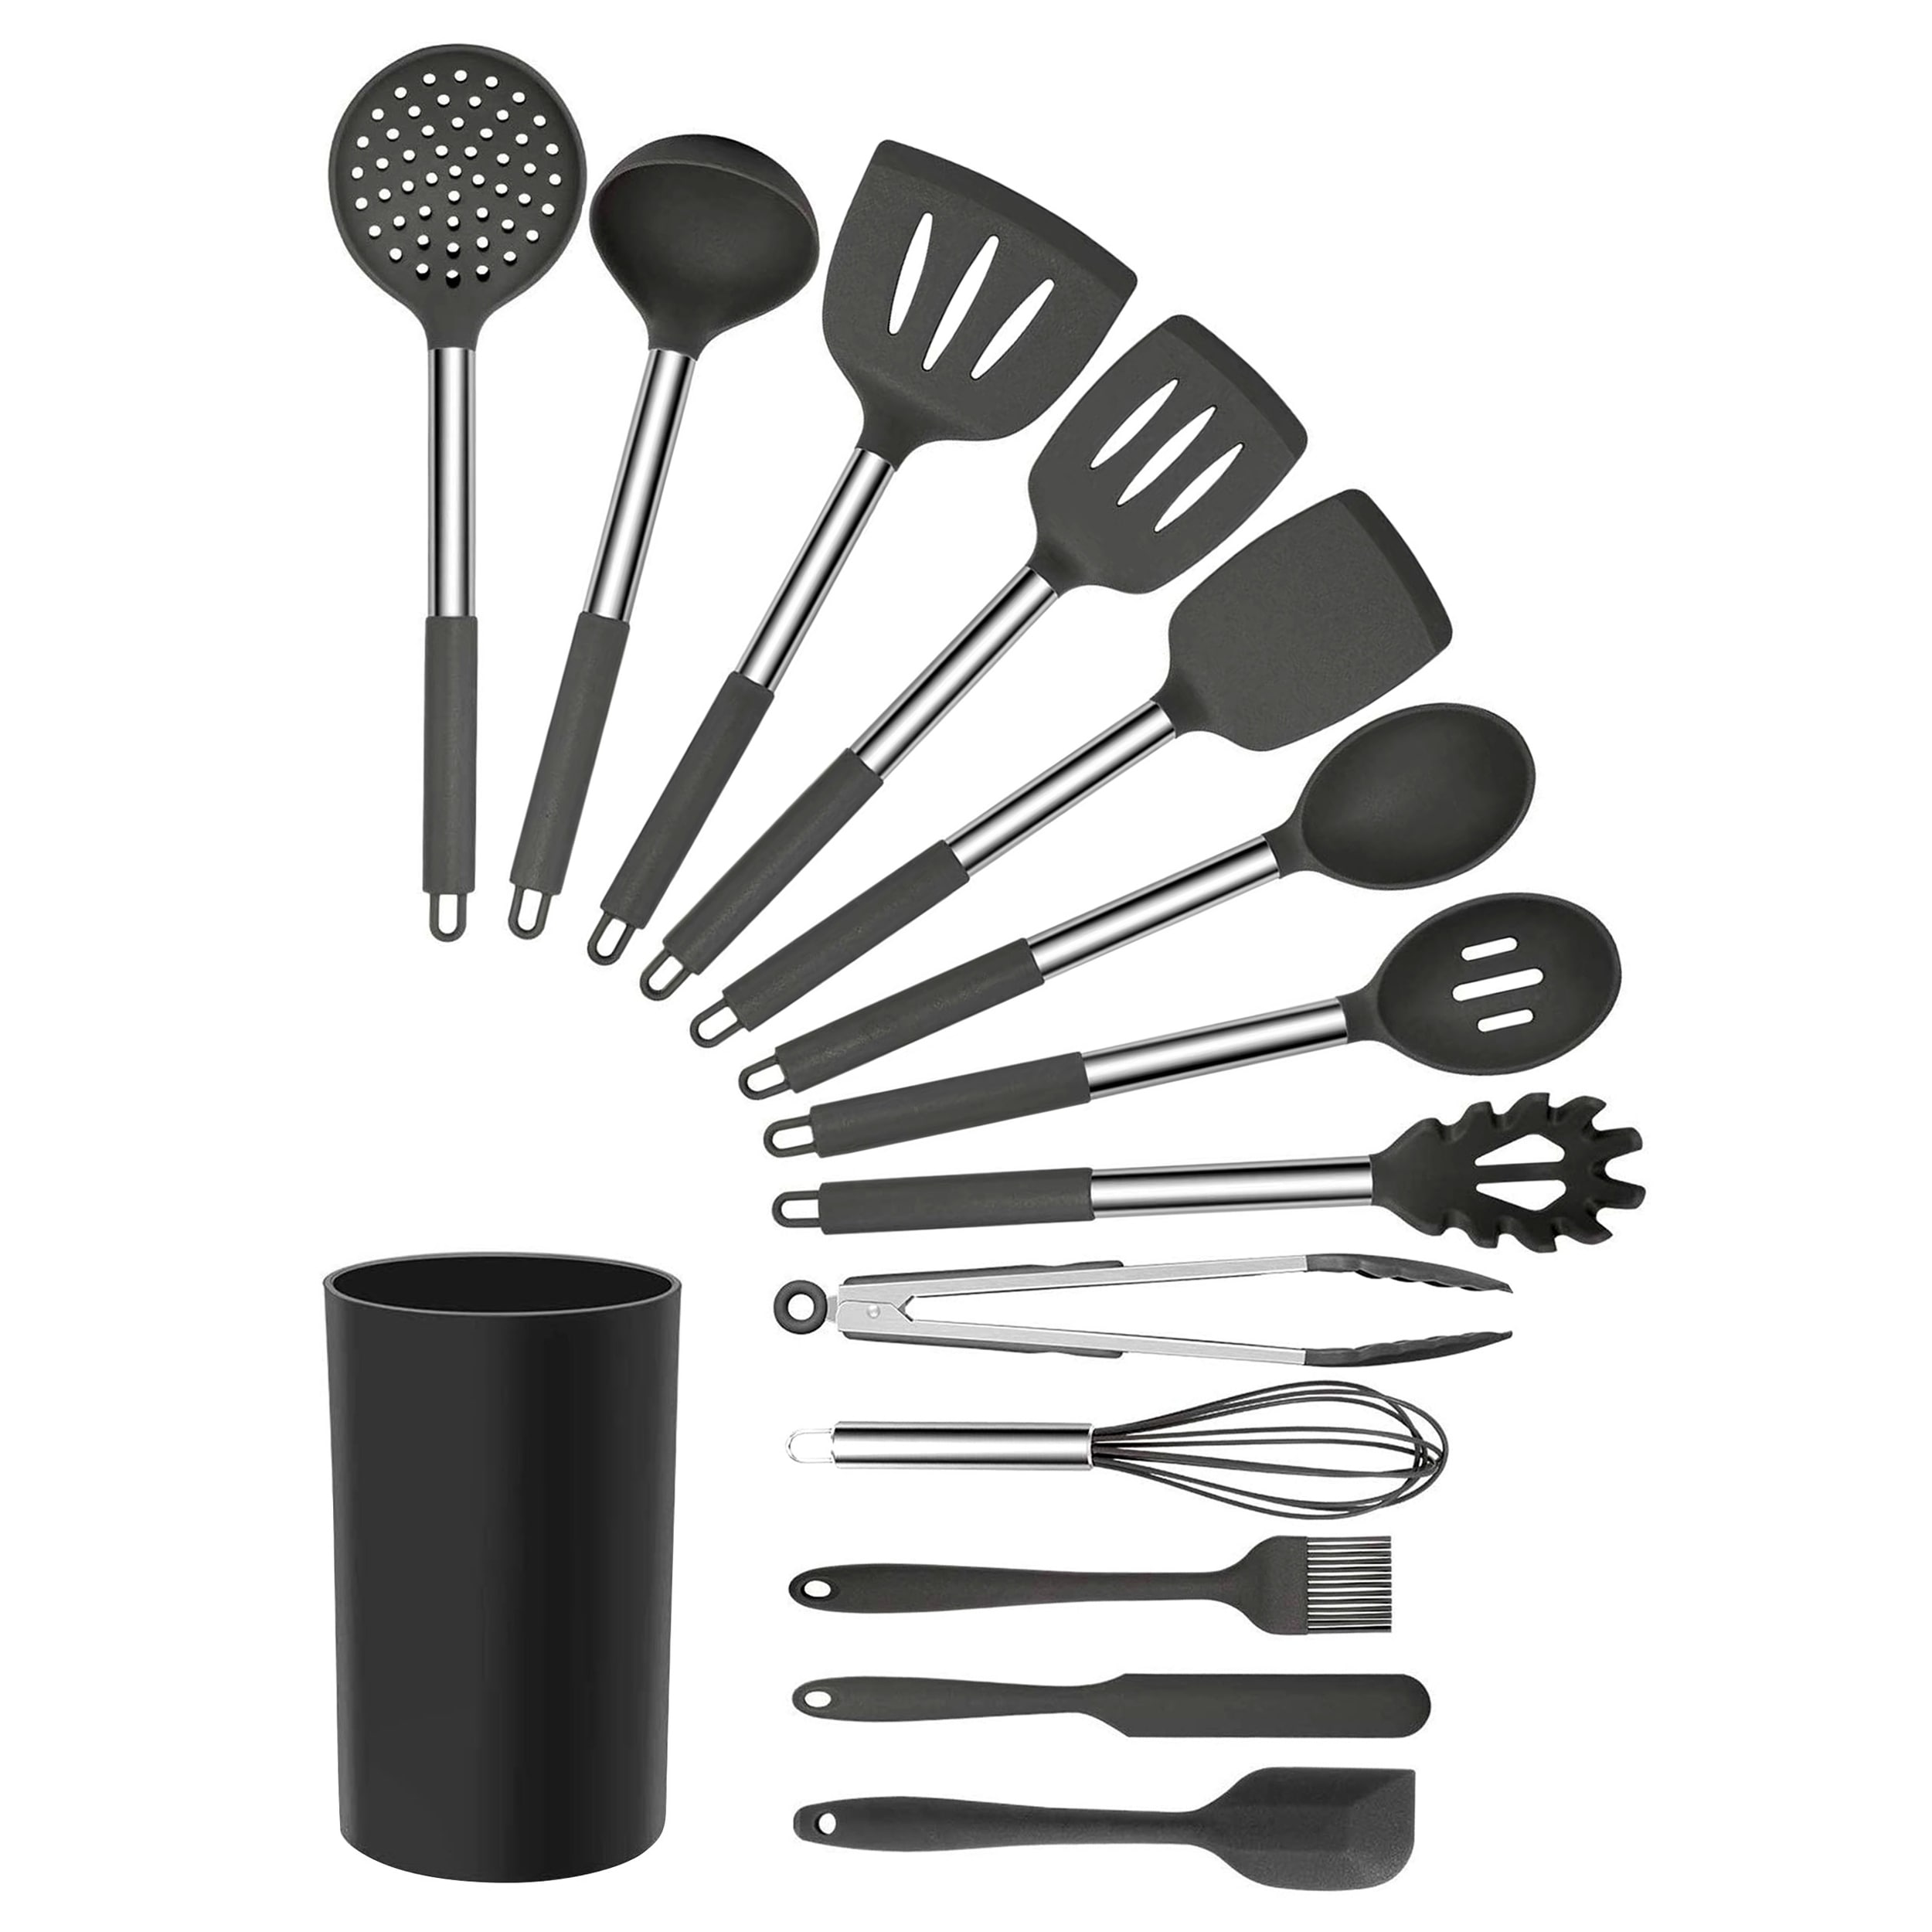 Chef Essential 23-Pc Stainless Steel Kitchen Utensil Set, Nonstick Kit